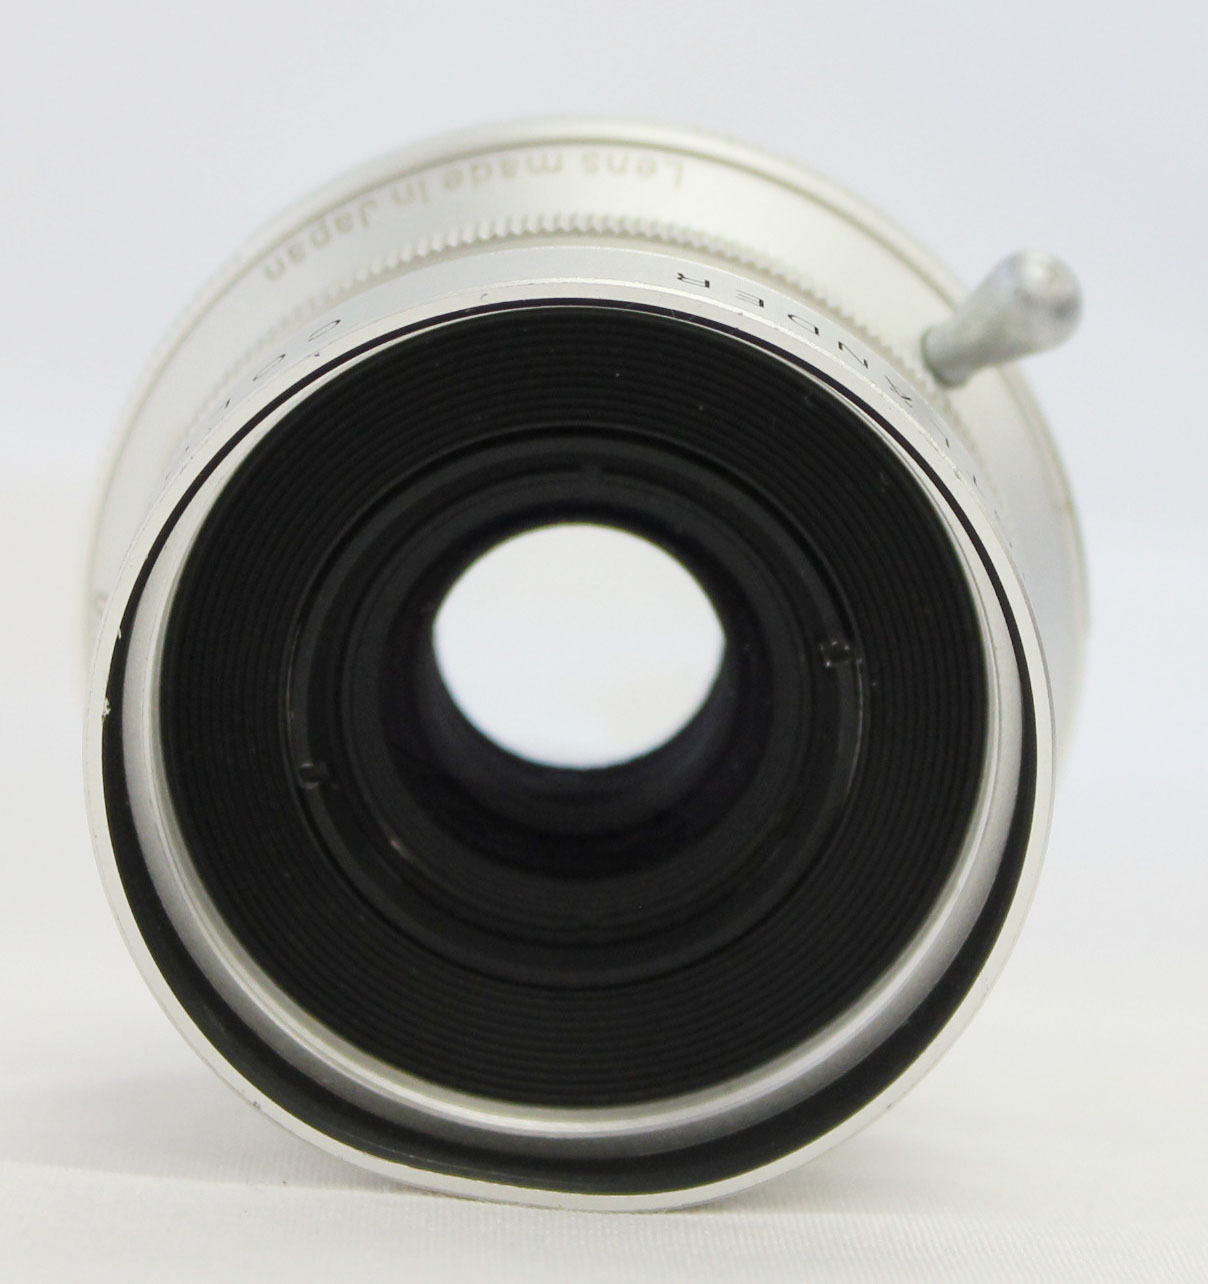  Voigtlander Color-Skopar 35mm F/2.5 MC Leica L39 LTM Lens from Japan Photo 5